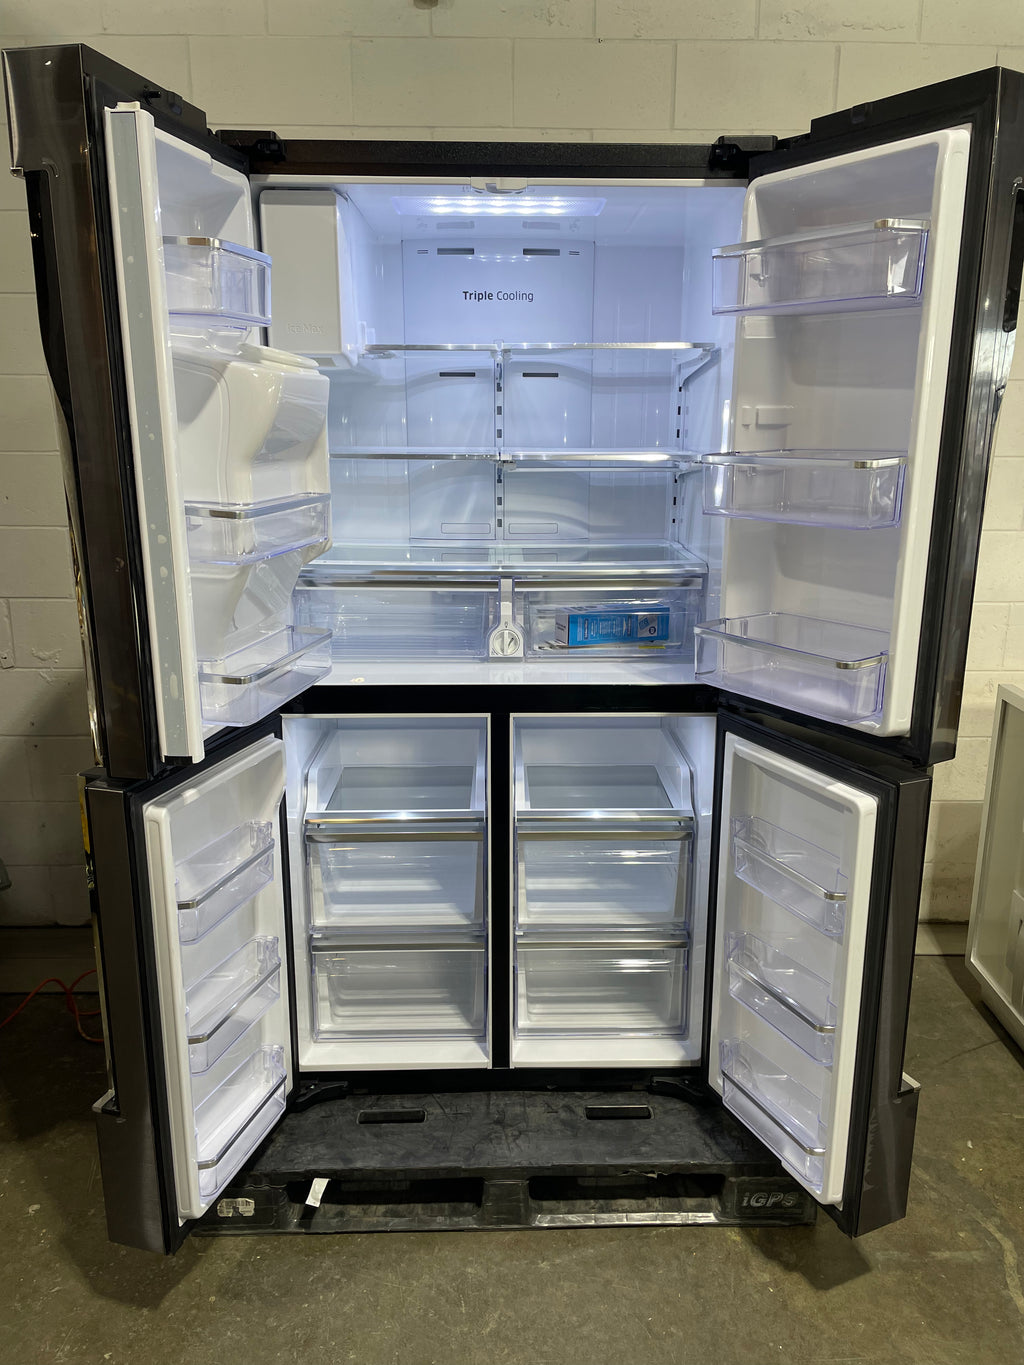 NEW Samsung 36" Counter-Depth Refrigerator